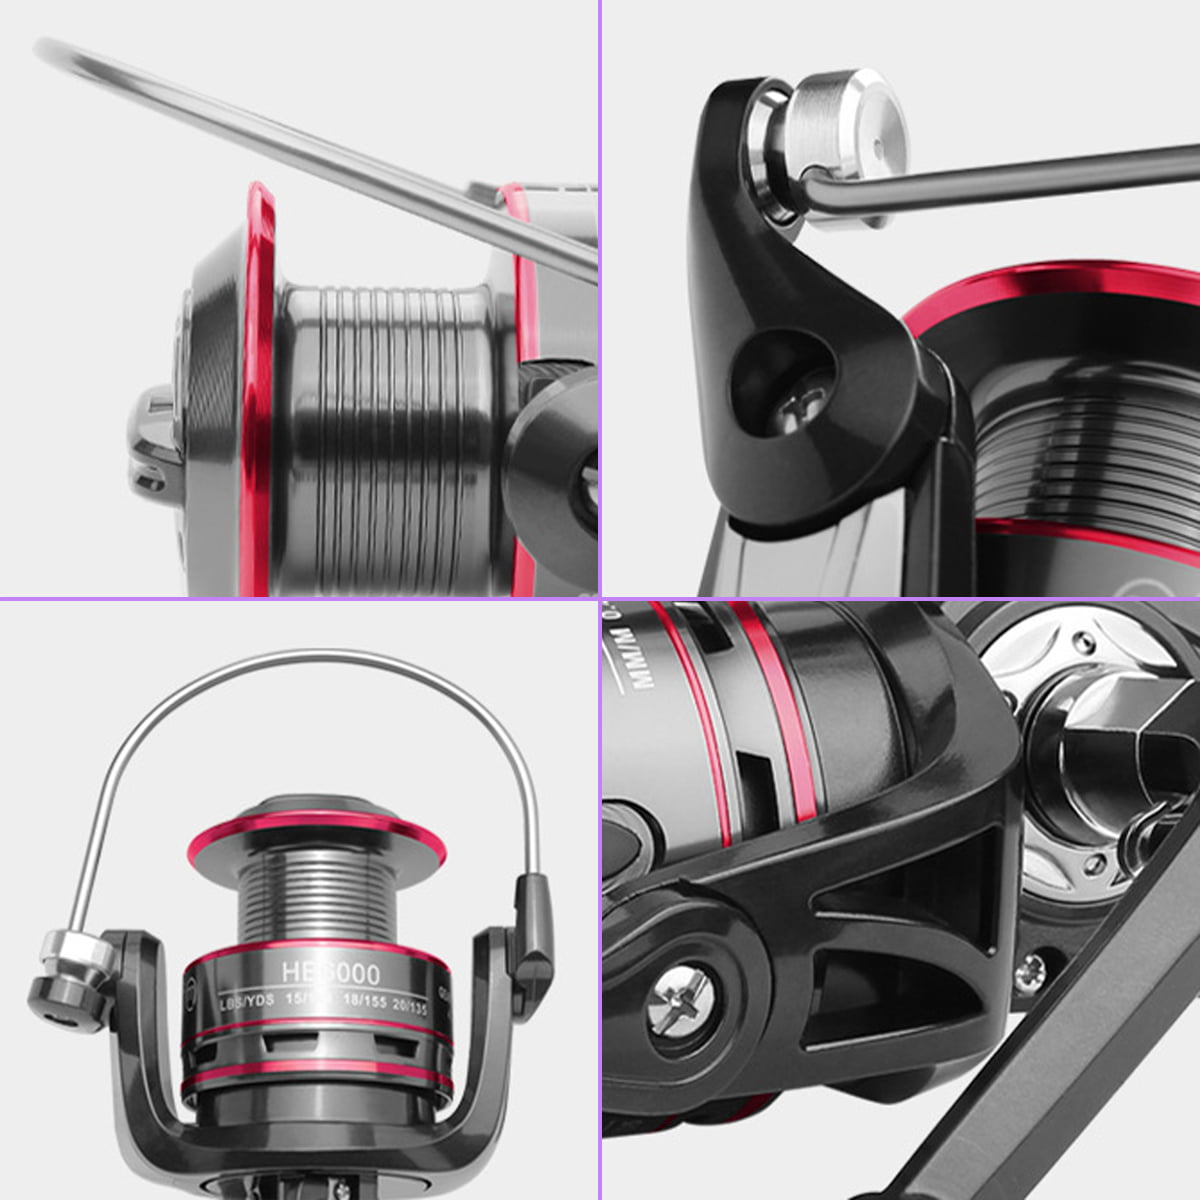 HB1000-6000 Spinning Fishing Reel 12BB Metal Spool Gear Ratio 5.2:1 Left Right 